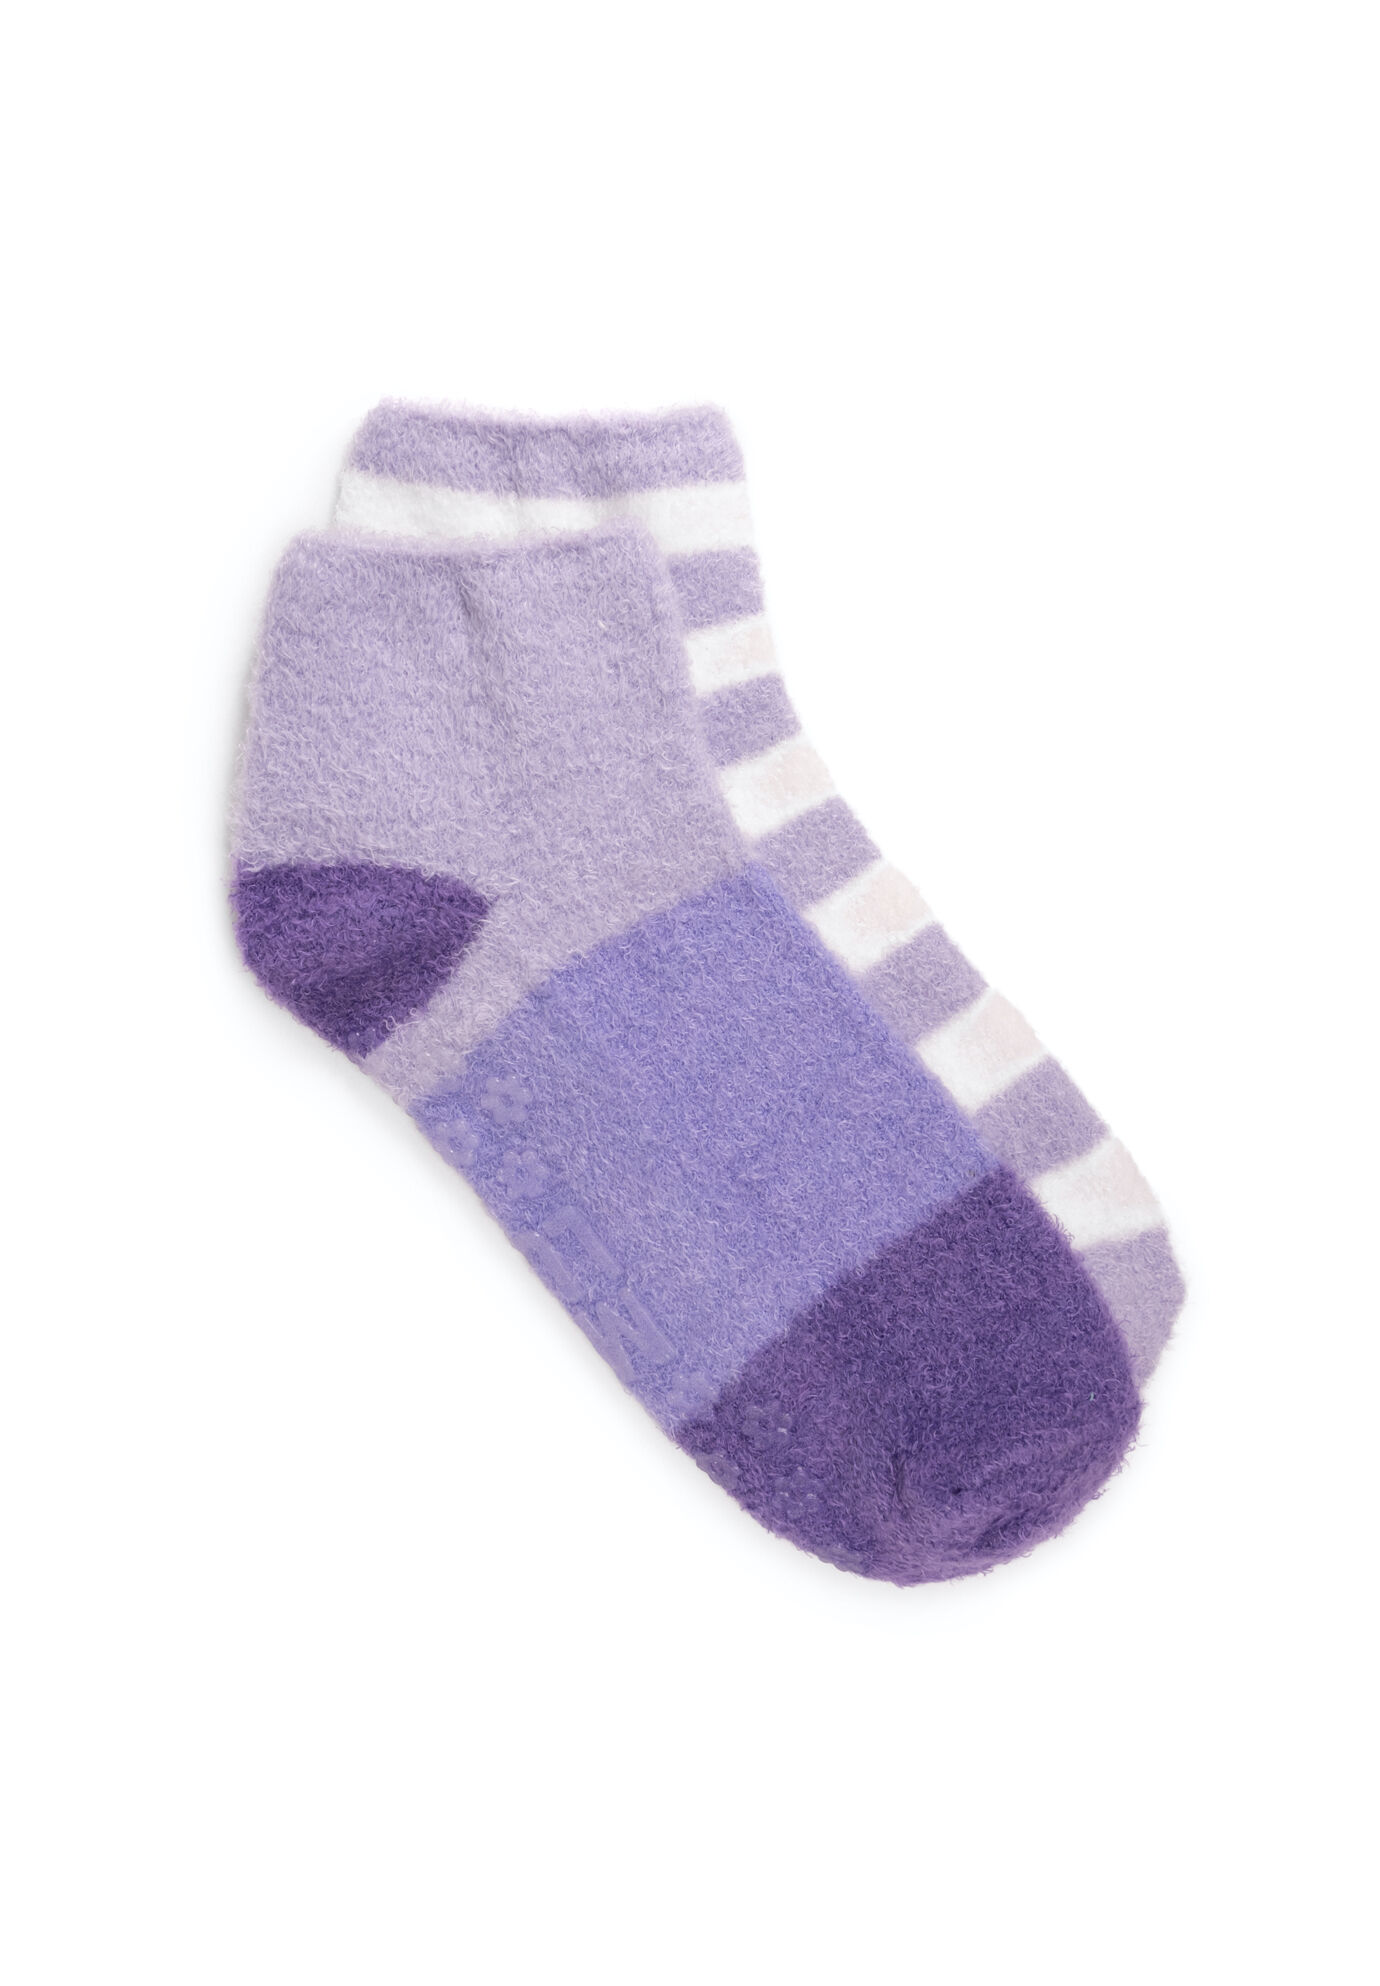 Women's 2 Pair Pack Aloe Infused Crew Socks by MUK LUKS in Purple (Size ONE)